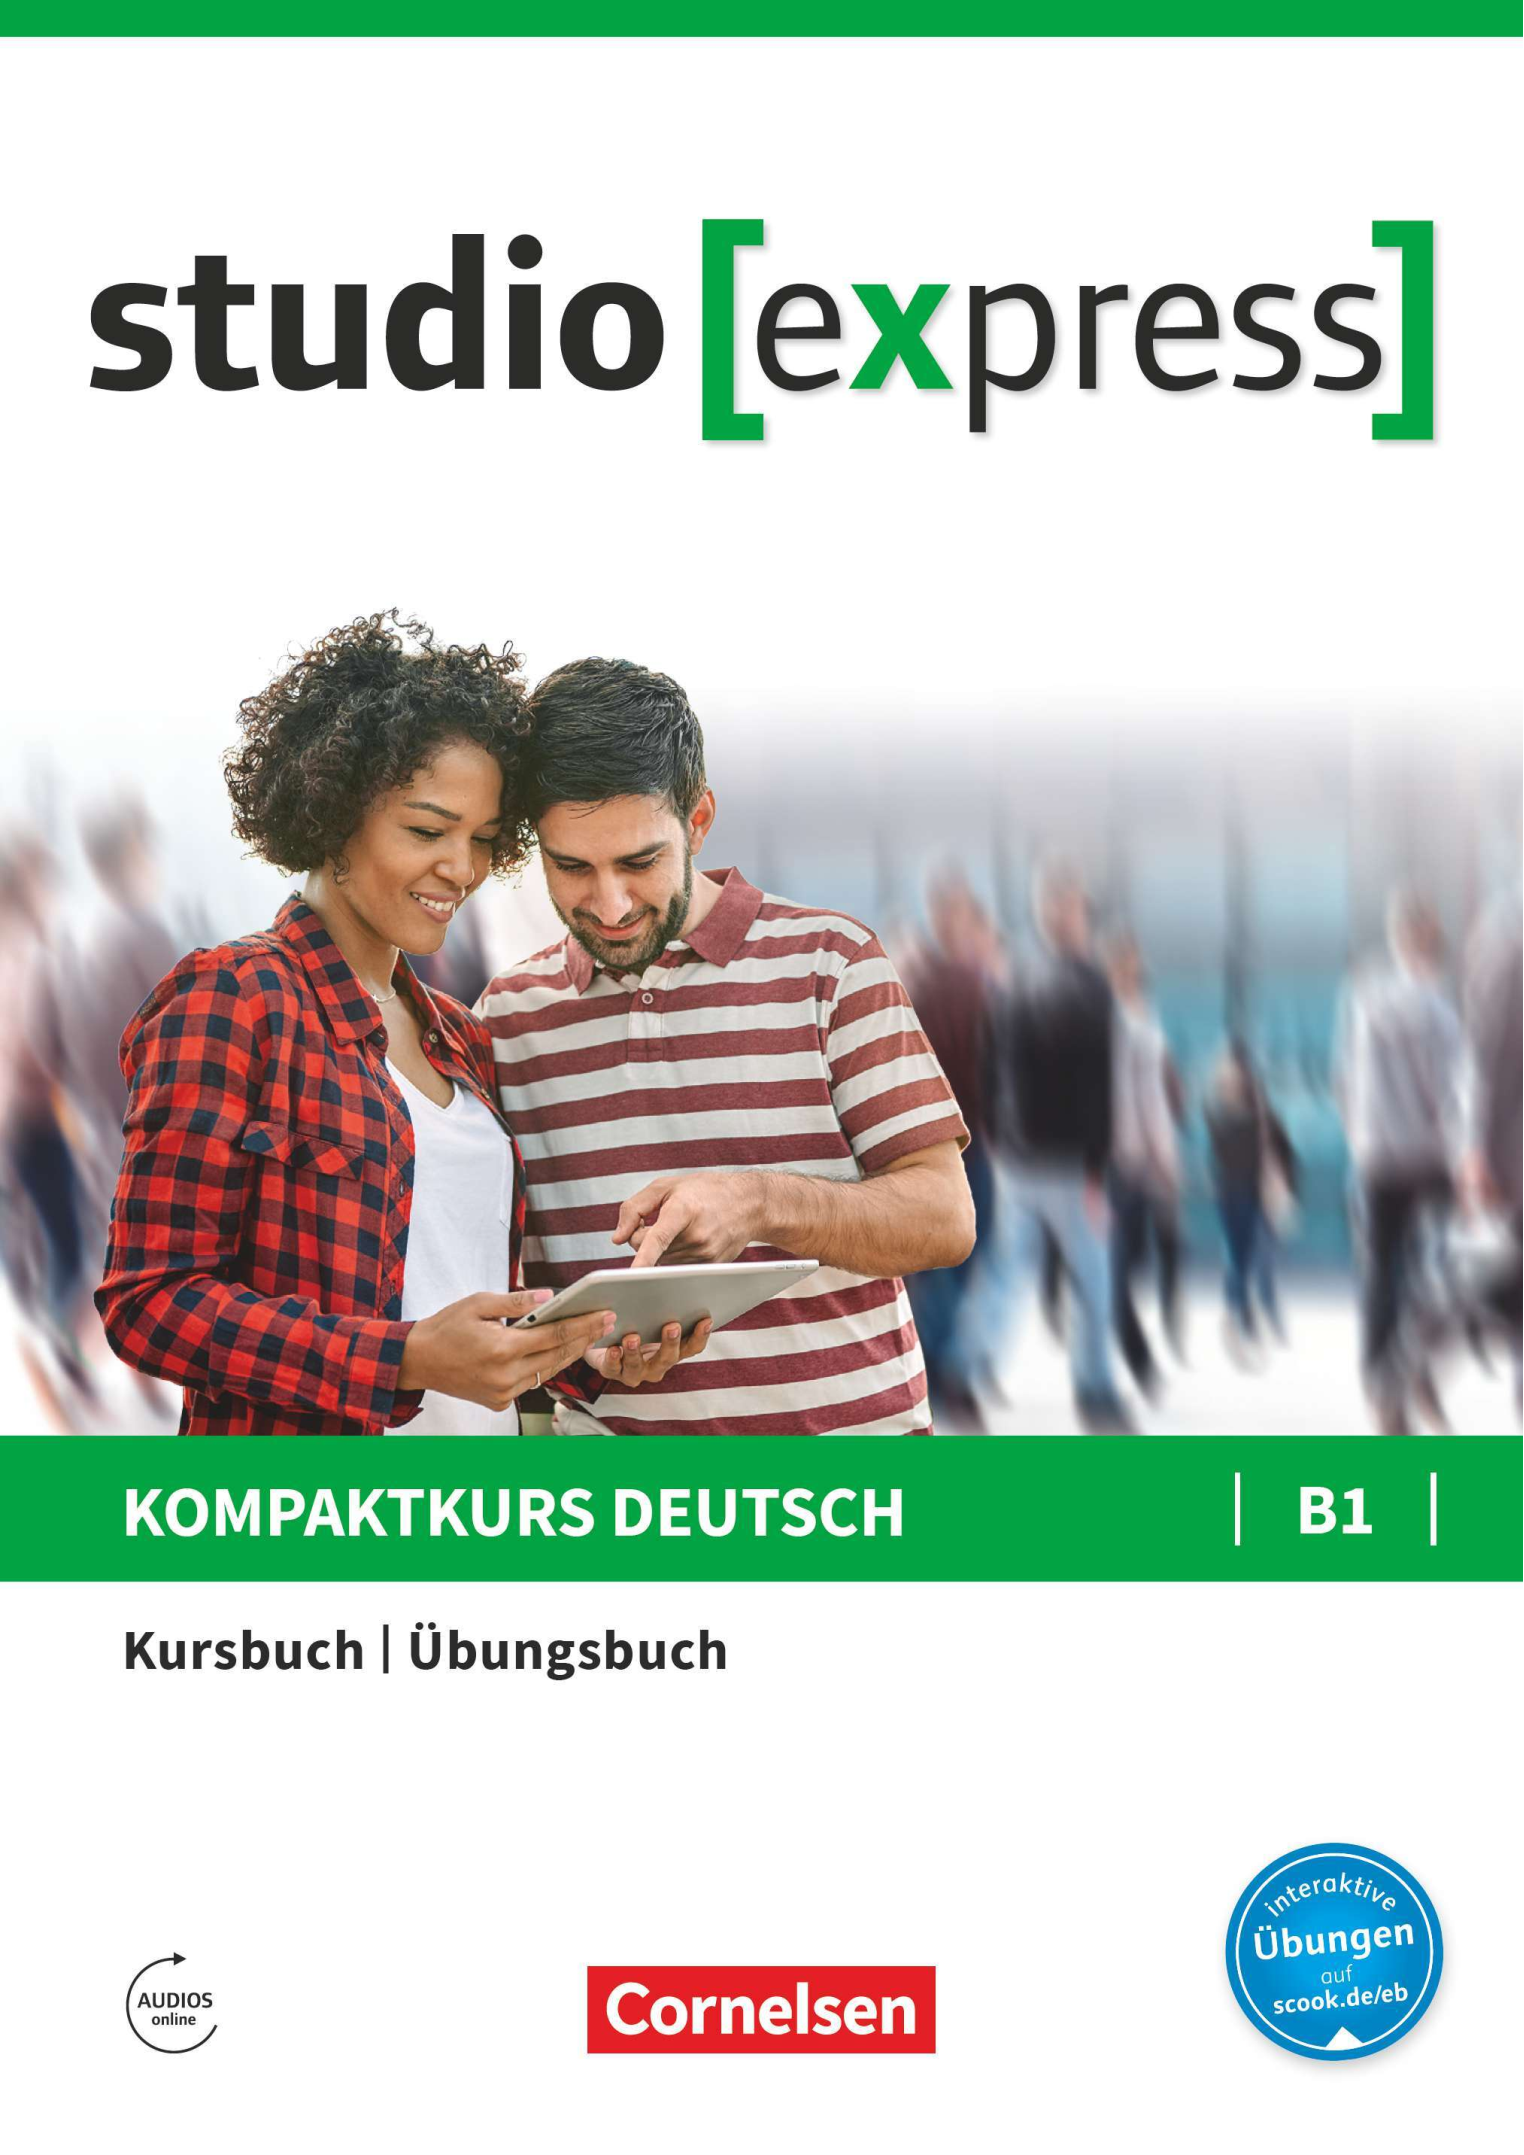 Rich Results on Google's SERP when searching for 'studio [express] B1 Kurs-und Übungsbuch mit Audios online'